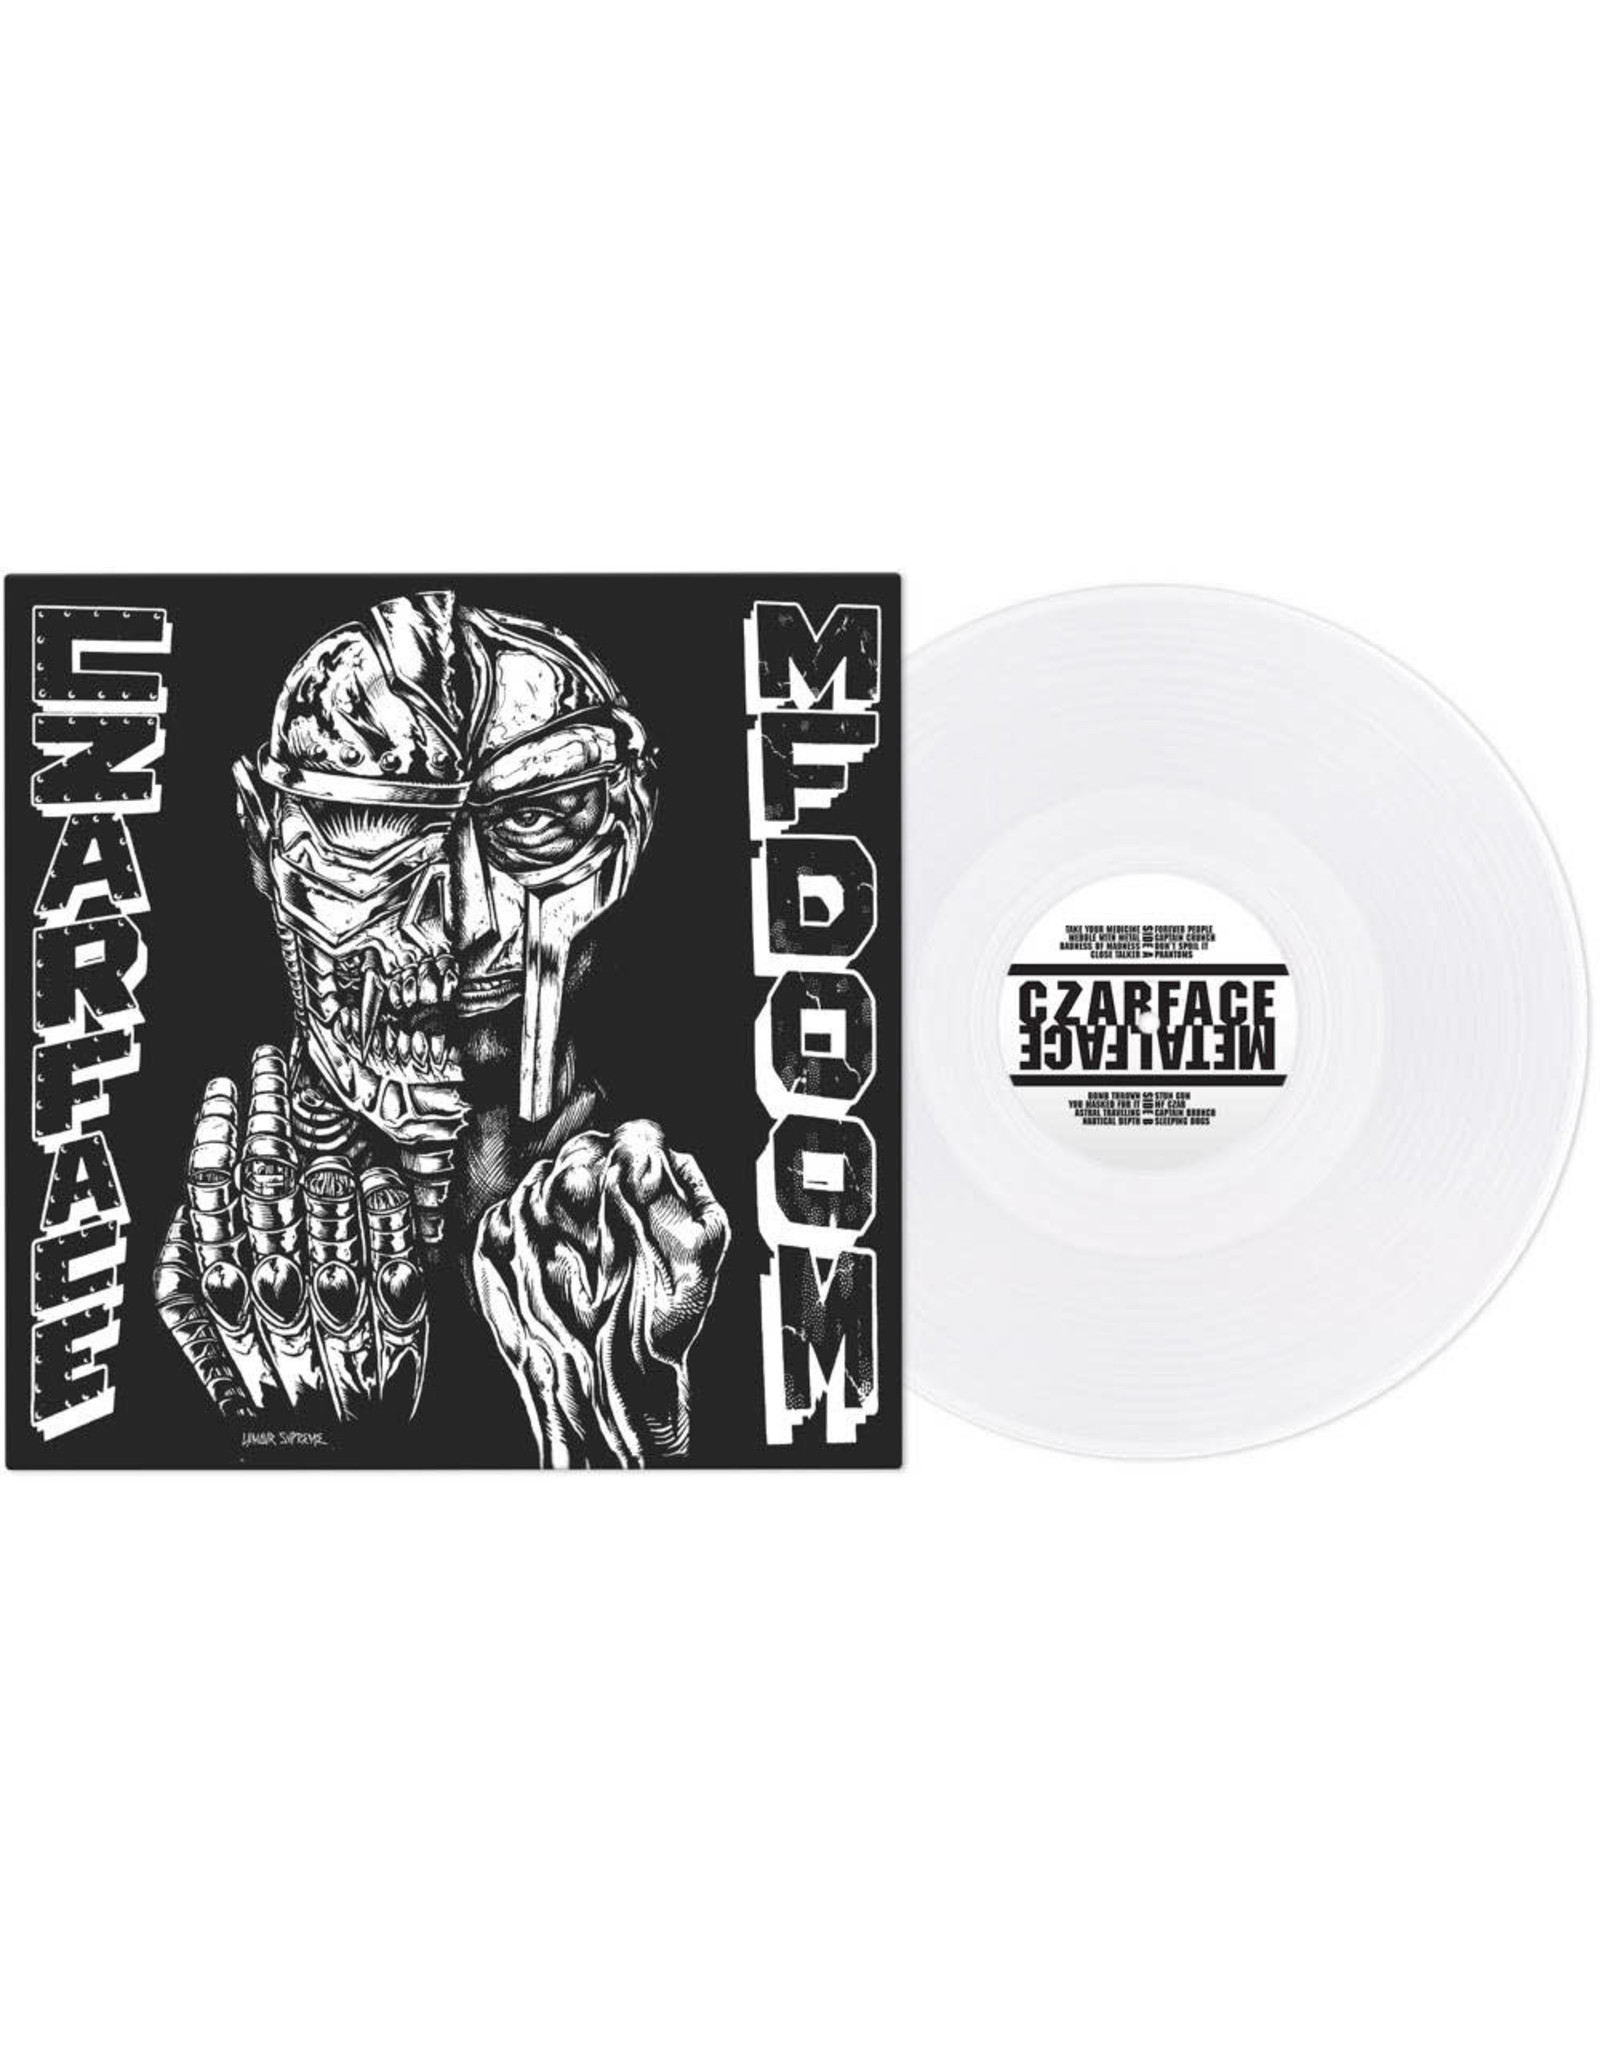 New Vinyl Czarface - Meets Metal Face (IEX Colorway Black & White Edition) LP